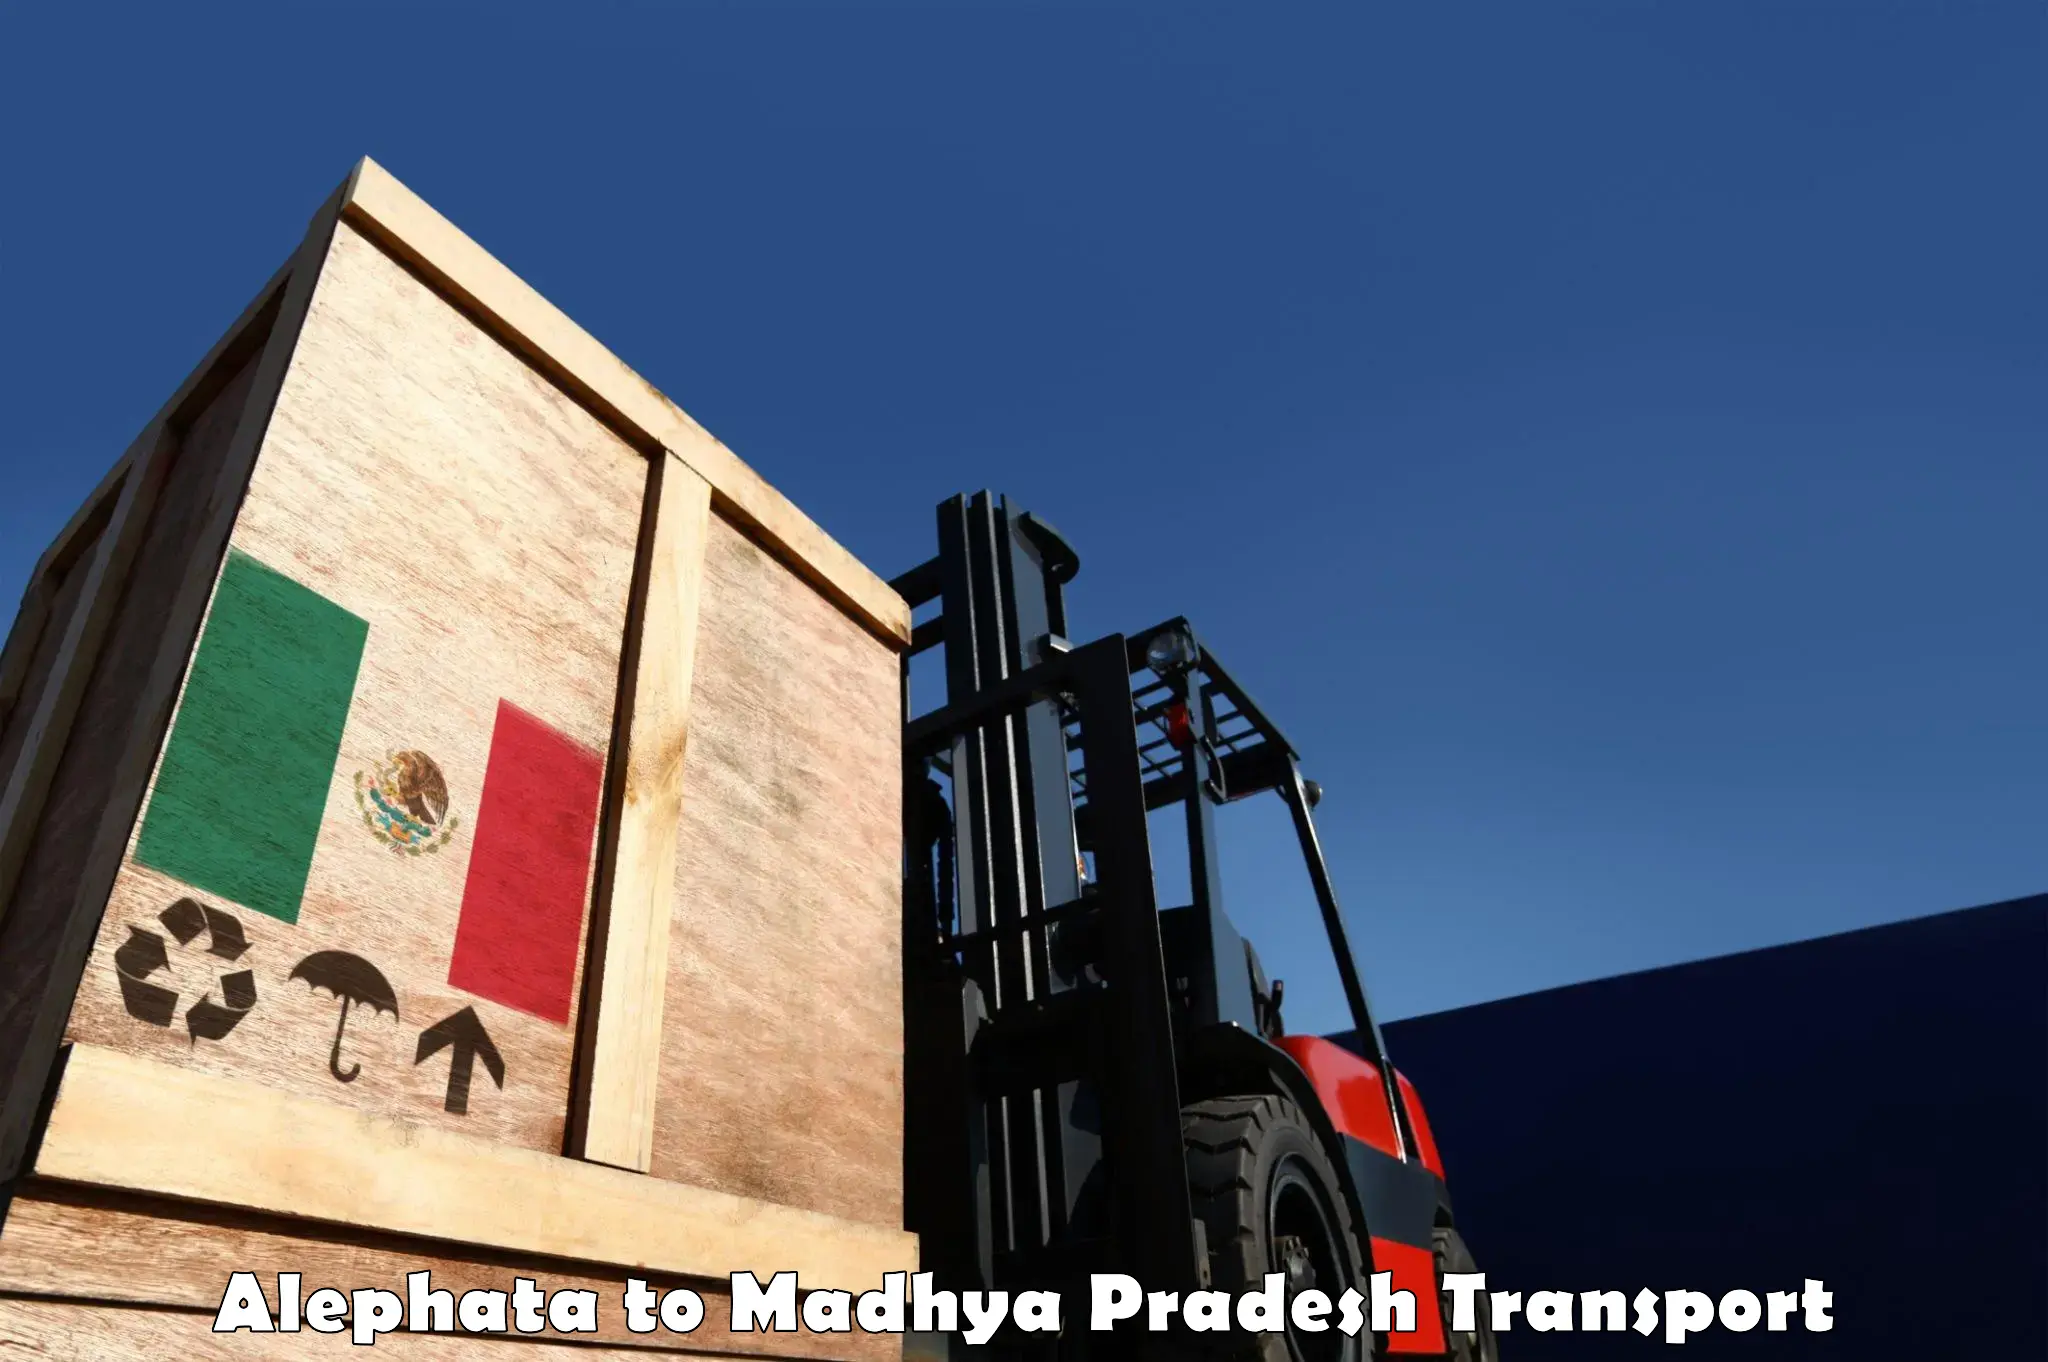 Truck transport companies in India Alephata to Ashoknagar